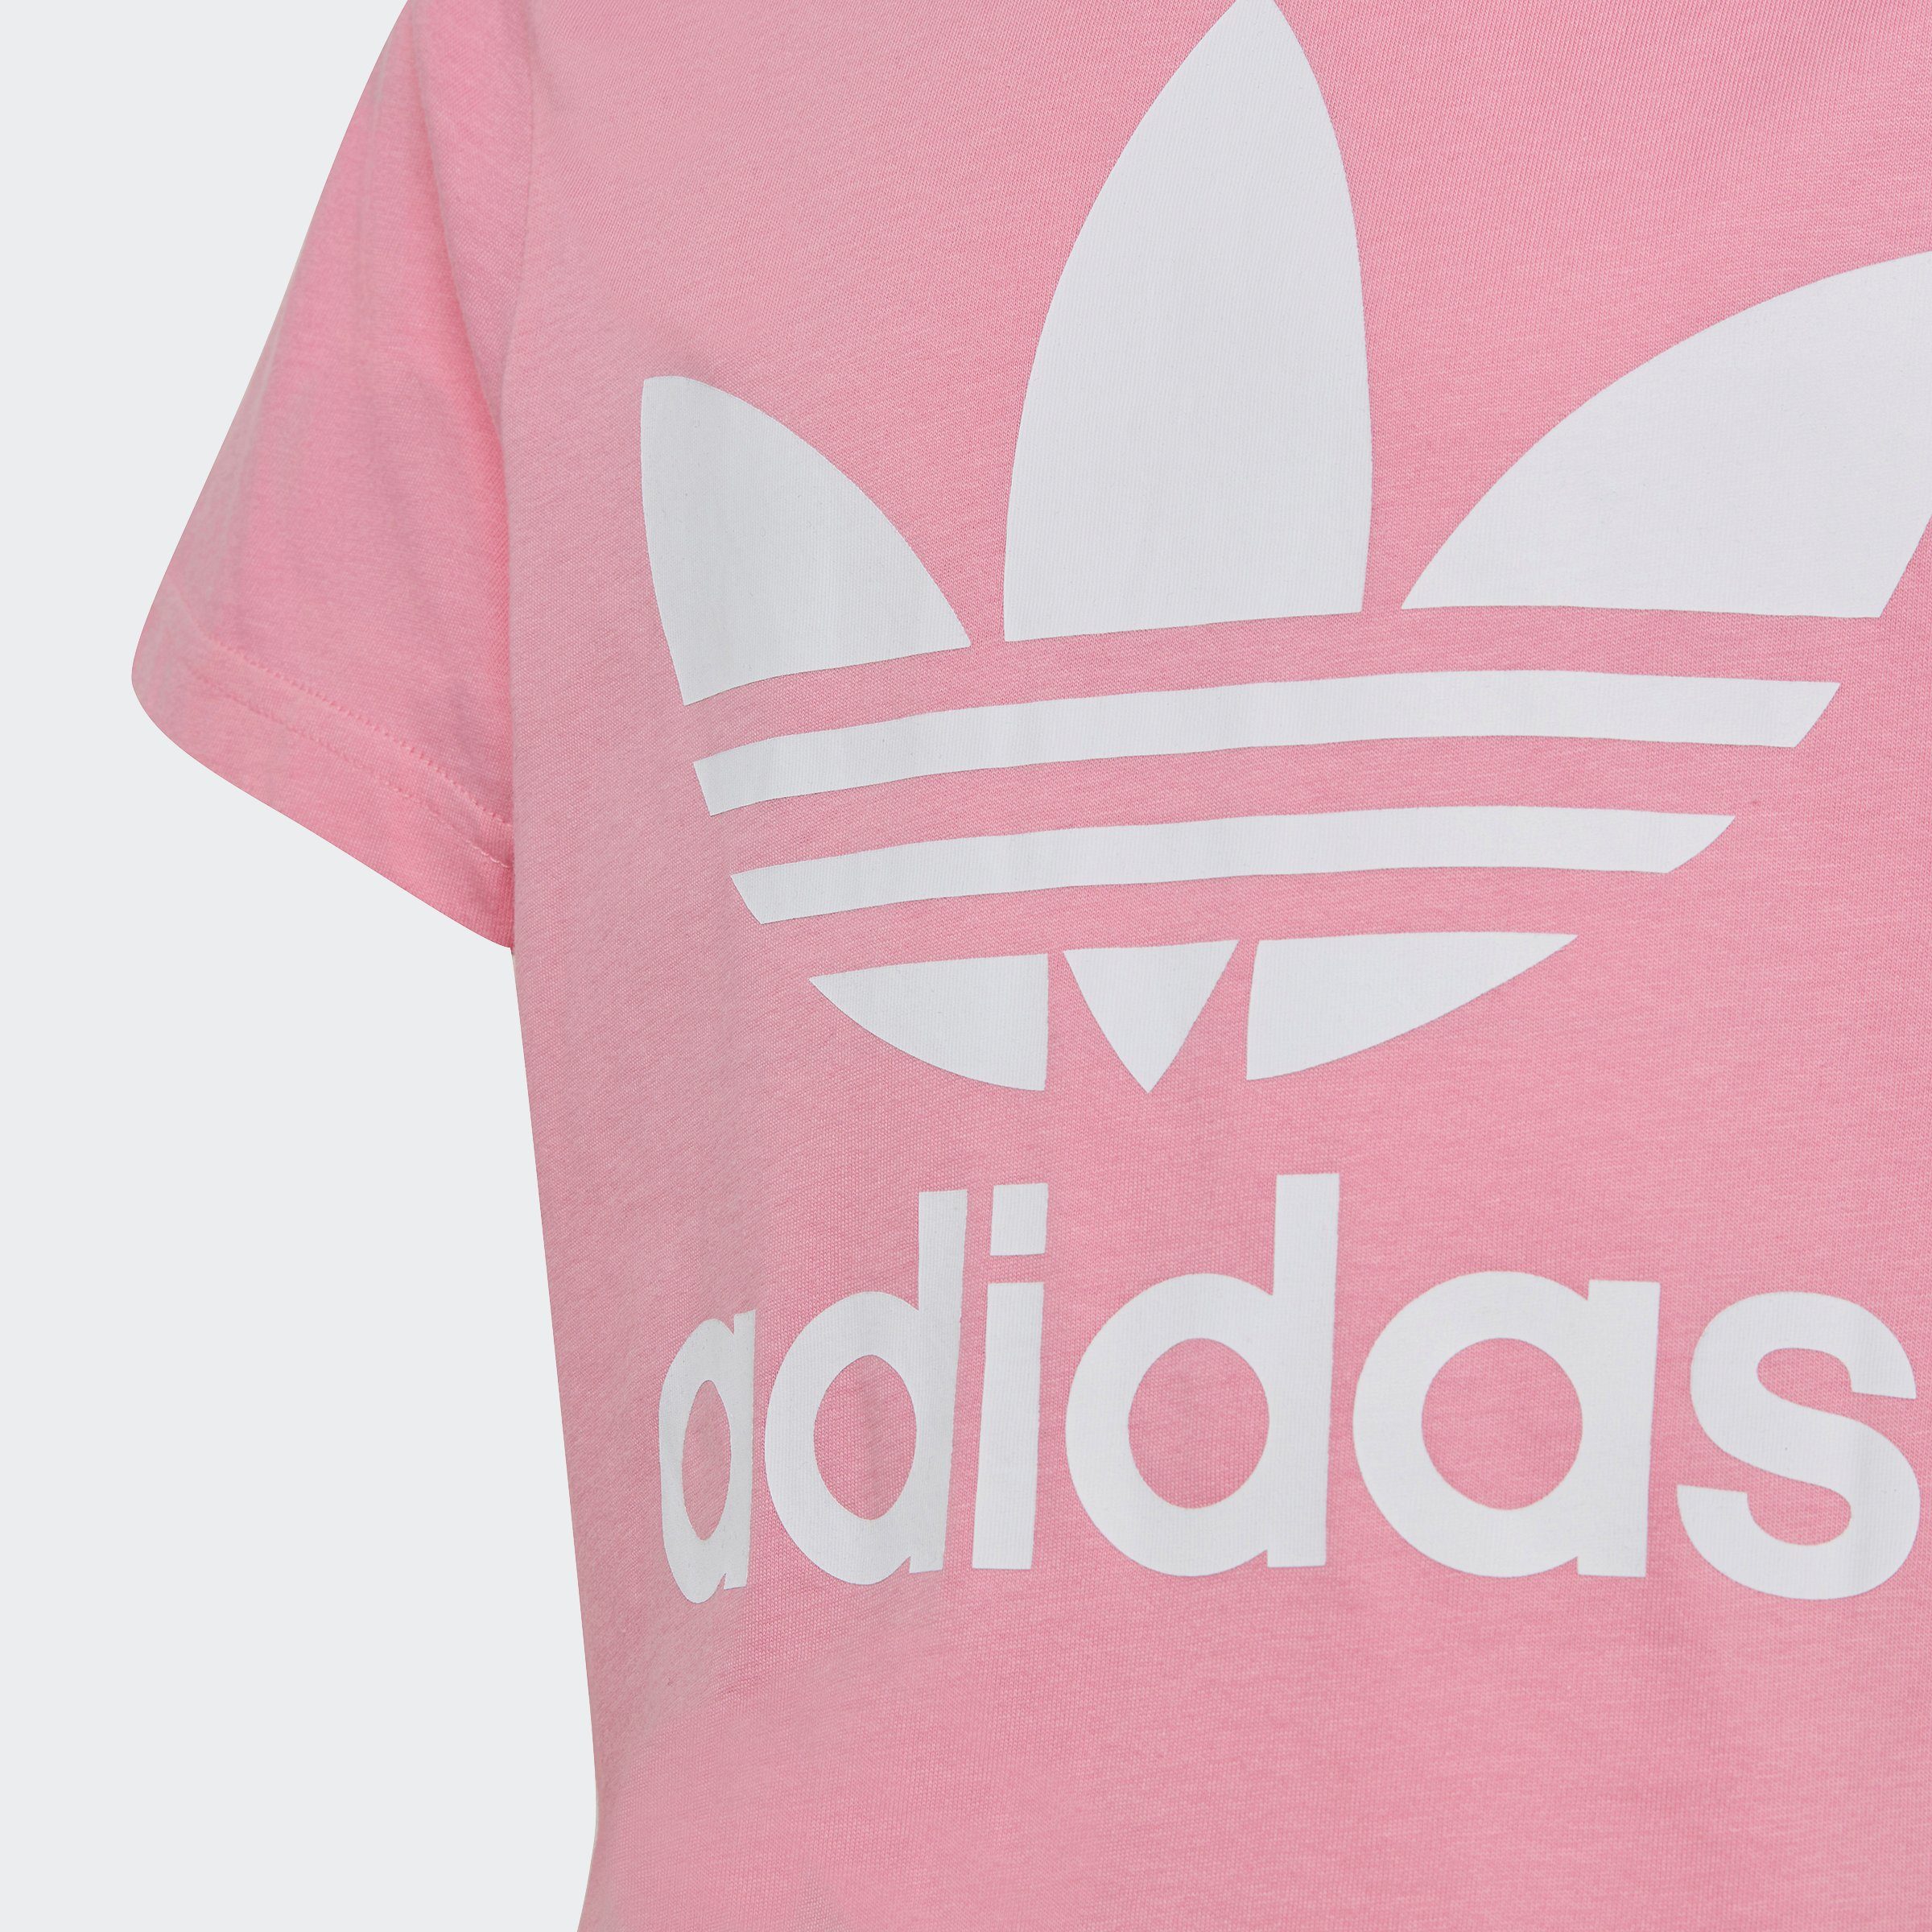 adidas Originals T-Shirt TREFOIL Pink Unisex Bliss TEE / White